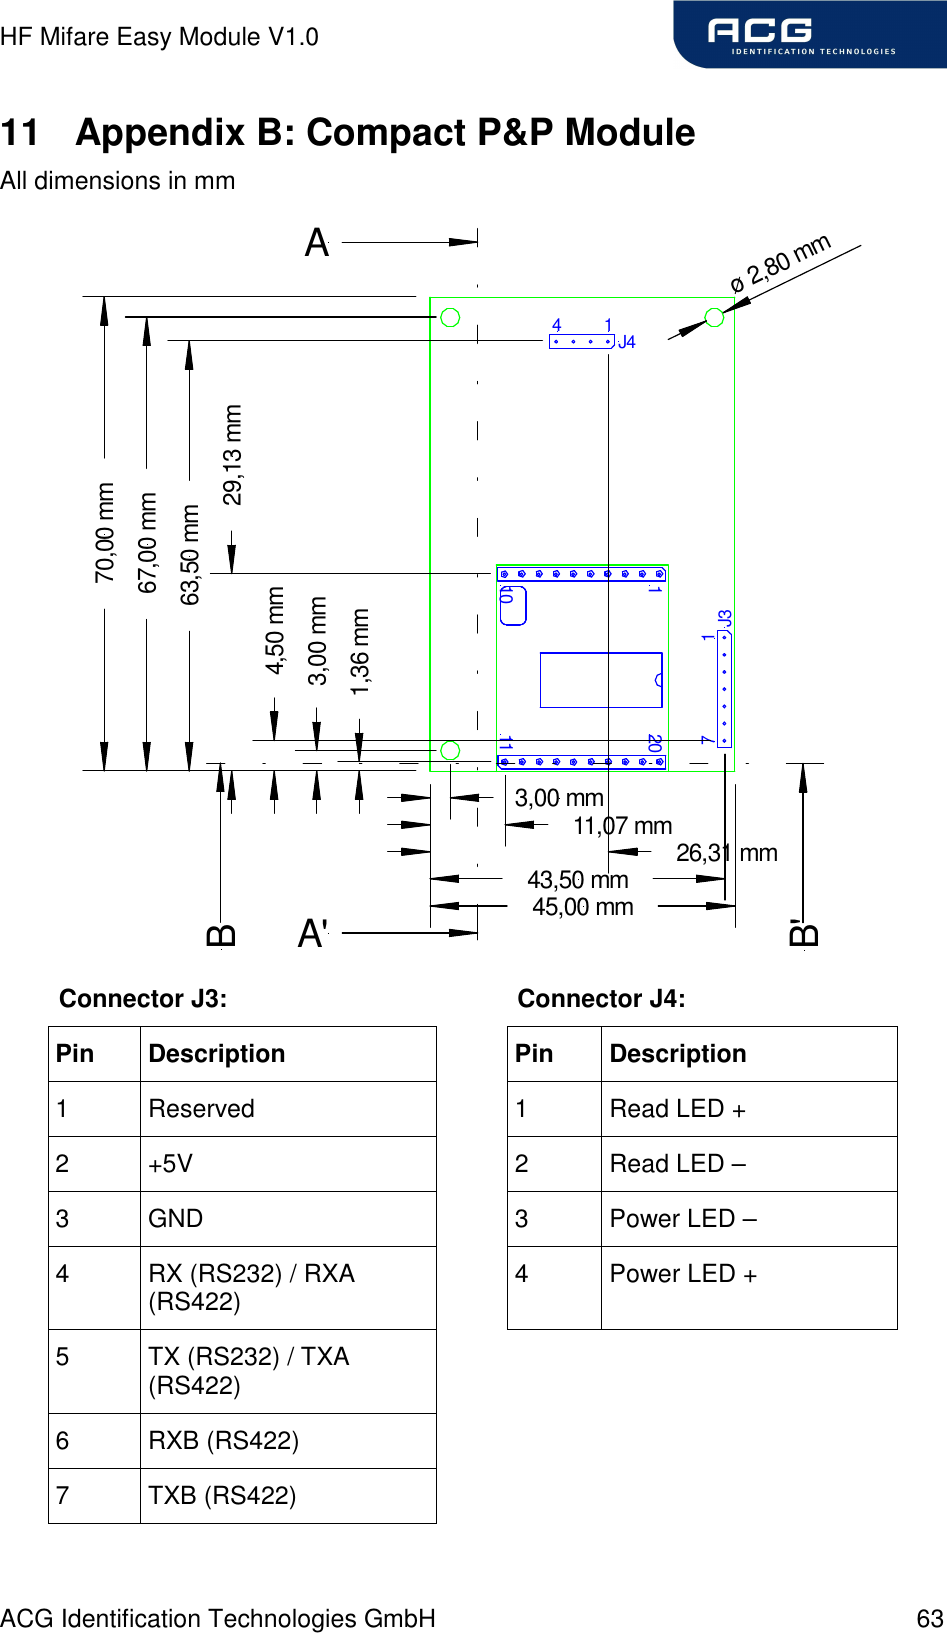 HF Mifare Easy Module V1.0 ACG Identification Technologies GmbH  63 11  Appendix B: Compact P&amp;P Module All dimensions in mm 110 112017J3J4141,36 mm3,00 mm4,50 mm29,13 mm63,50 mm67,00 mm70,00 mm3,00 mm11,07 mm26,31 mm43,50 mm45,00 mmø 2,80 mmAA&apos;B&apos;B    Connector J3:  Connector J4: Pin  Description    Pin  Description 1  Reserved    1  Read LED + 2  +5V    2  Read LED – 3  GND    3  Power LED – 4  RX (RS232) / RXA (RS422)    4  Power LED + 5  TX (RS232) / TXA (RS422)       6  RXB (RS422)       7  TXB (RS422)        